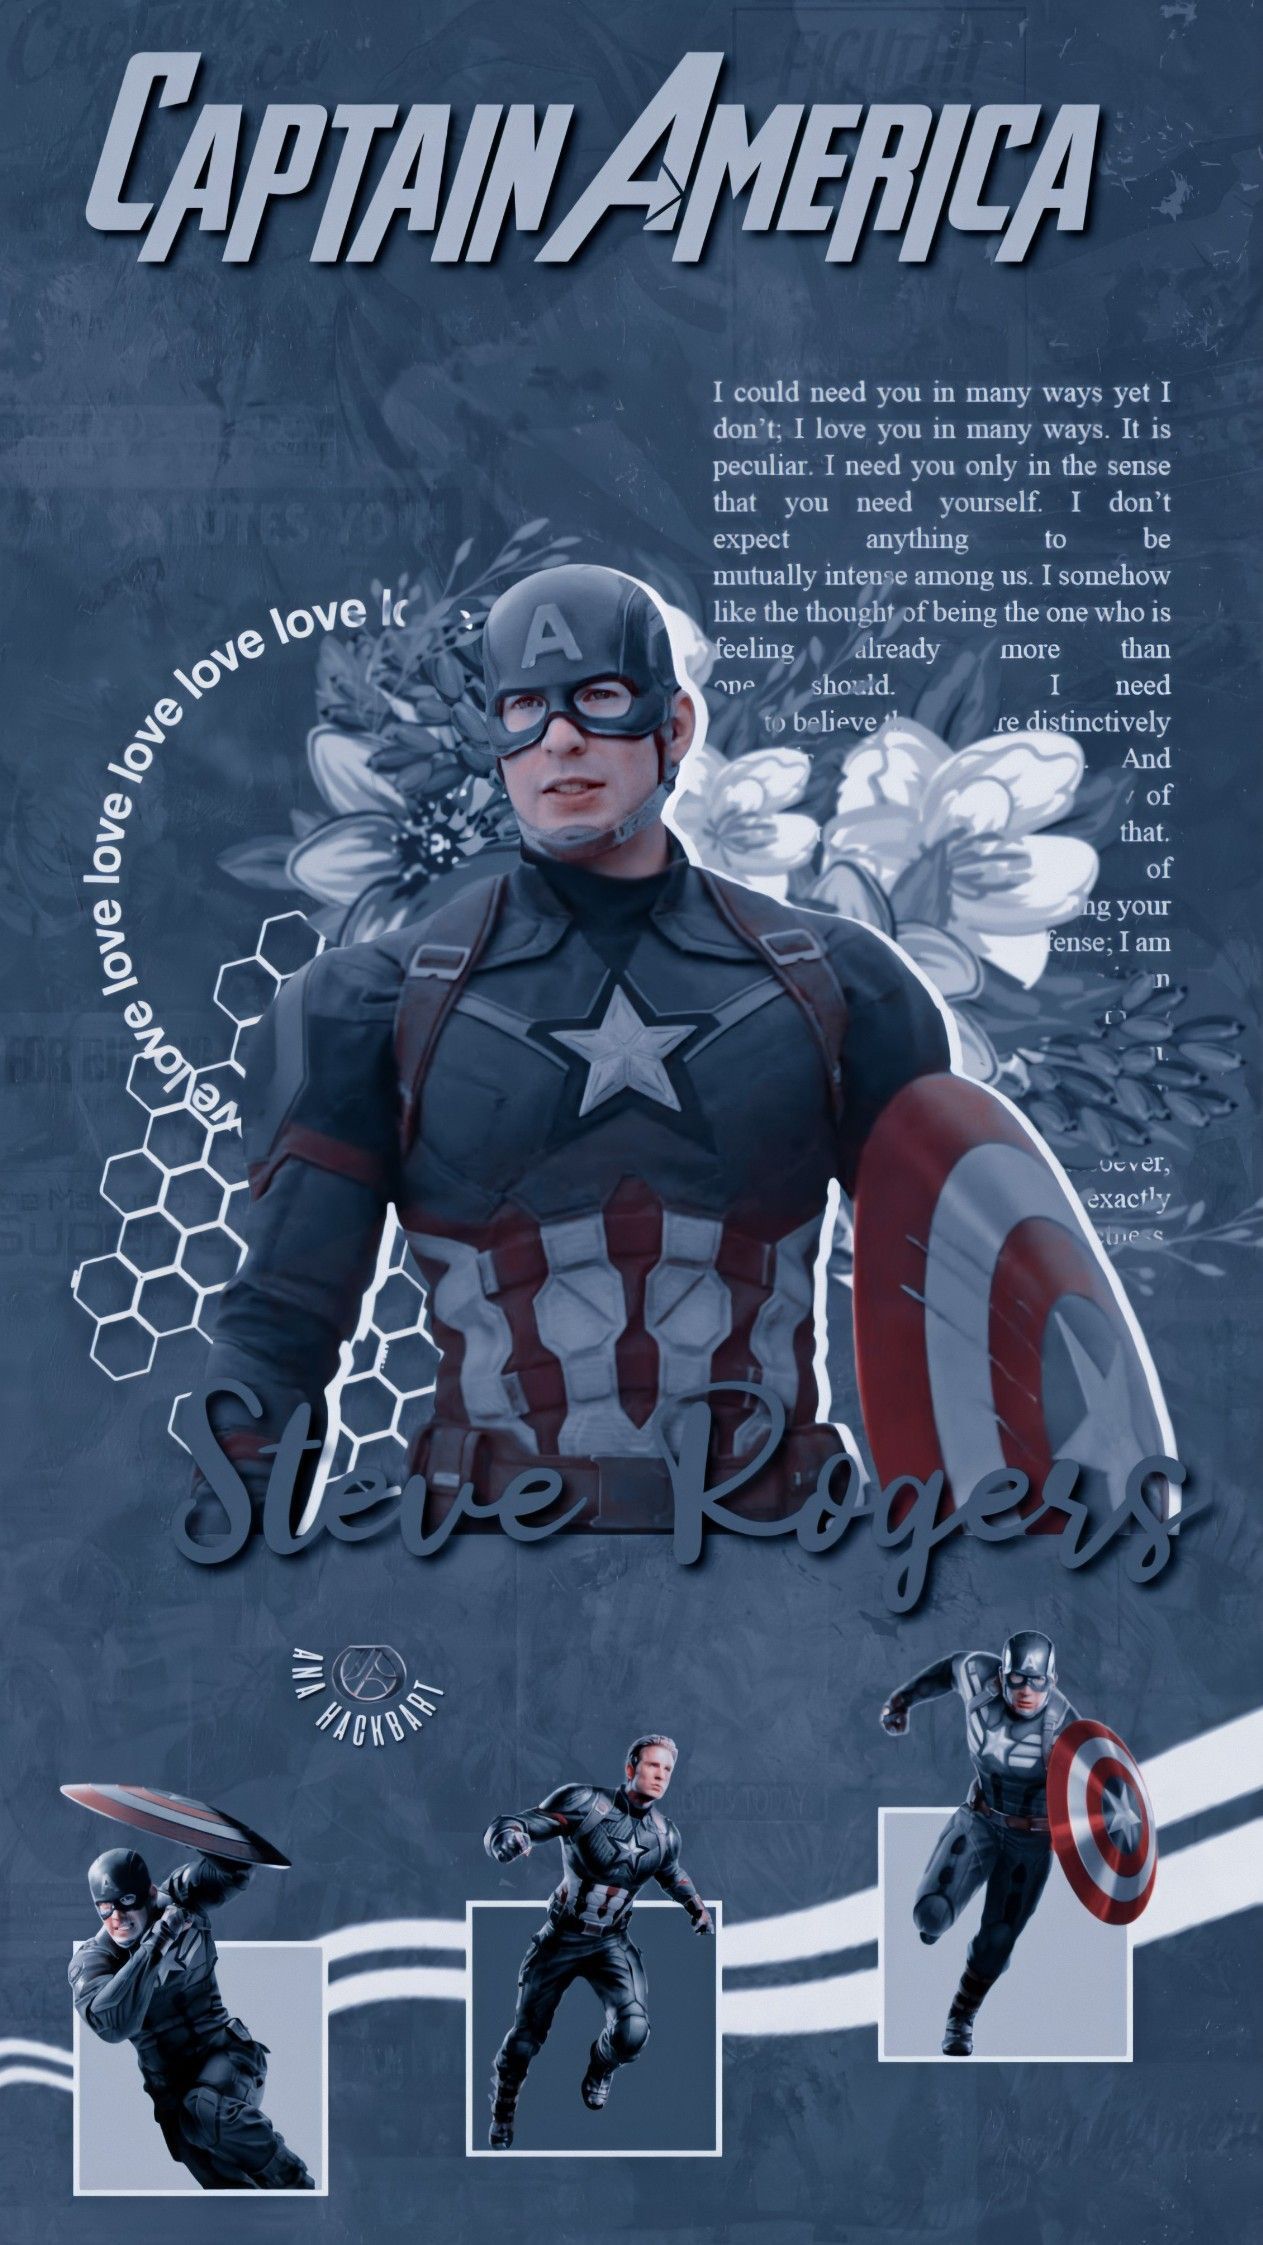 Wallpaper Captain America. Captain america wallpaper, Marvel captain america, Marvel comics funny